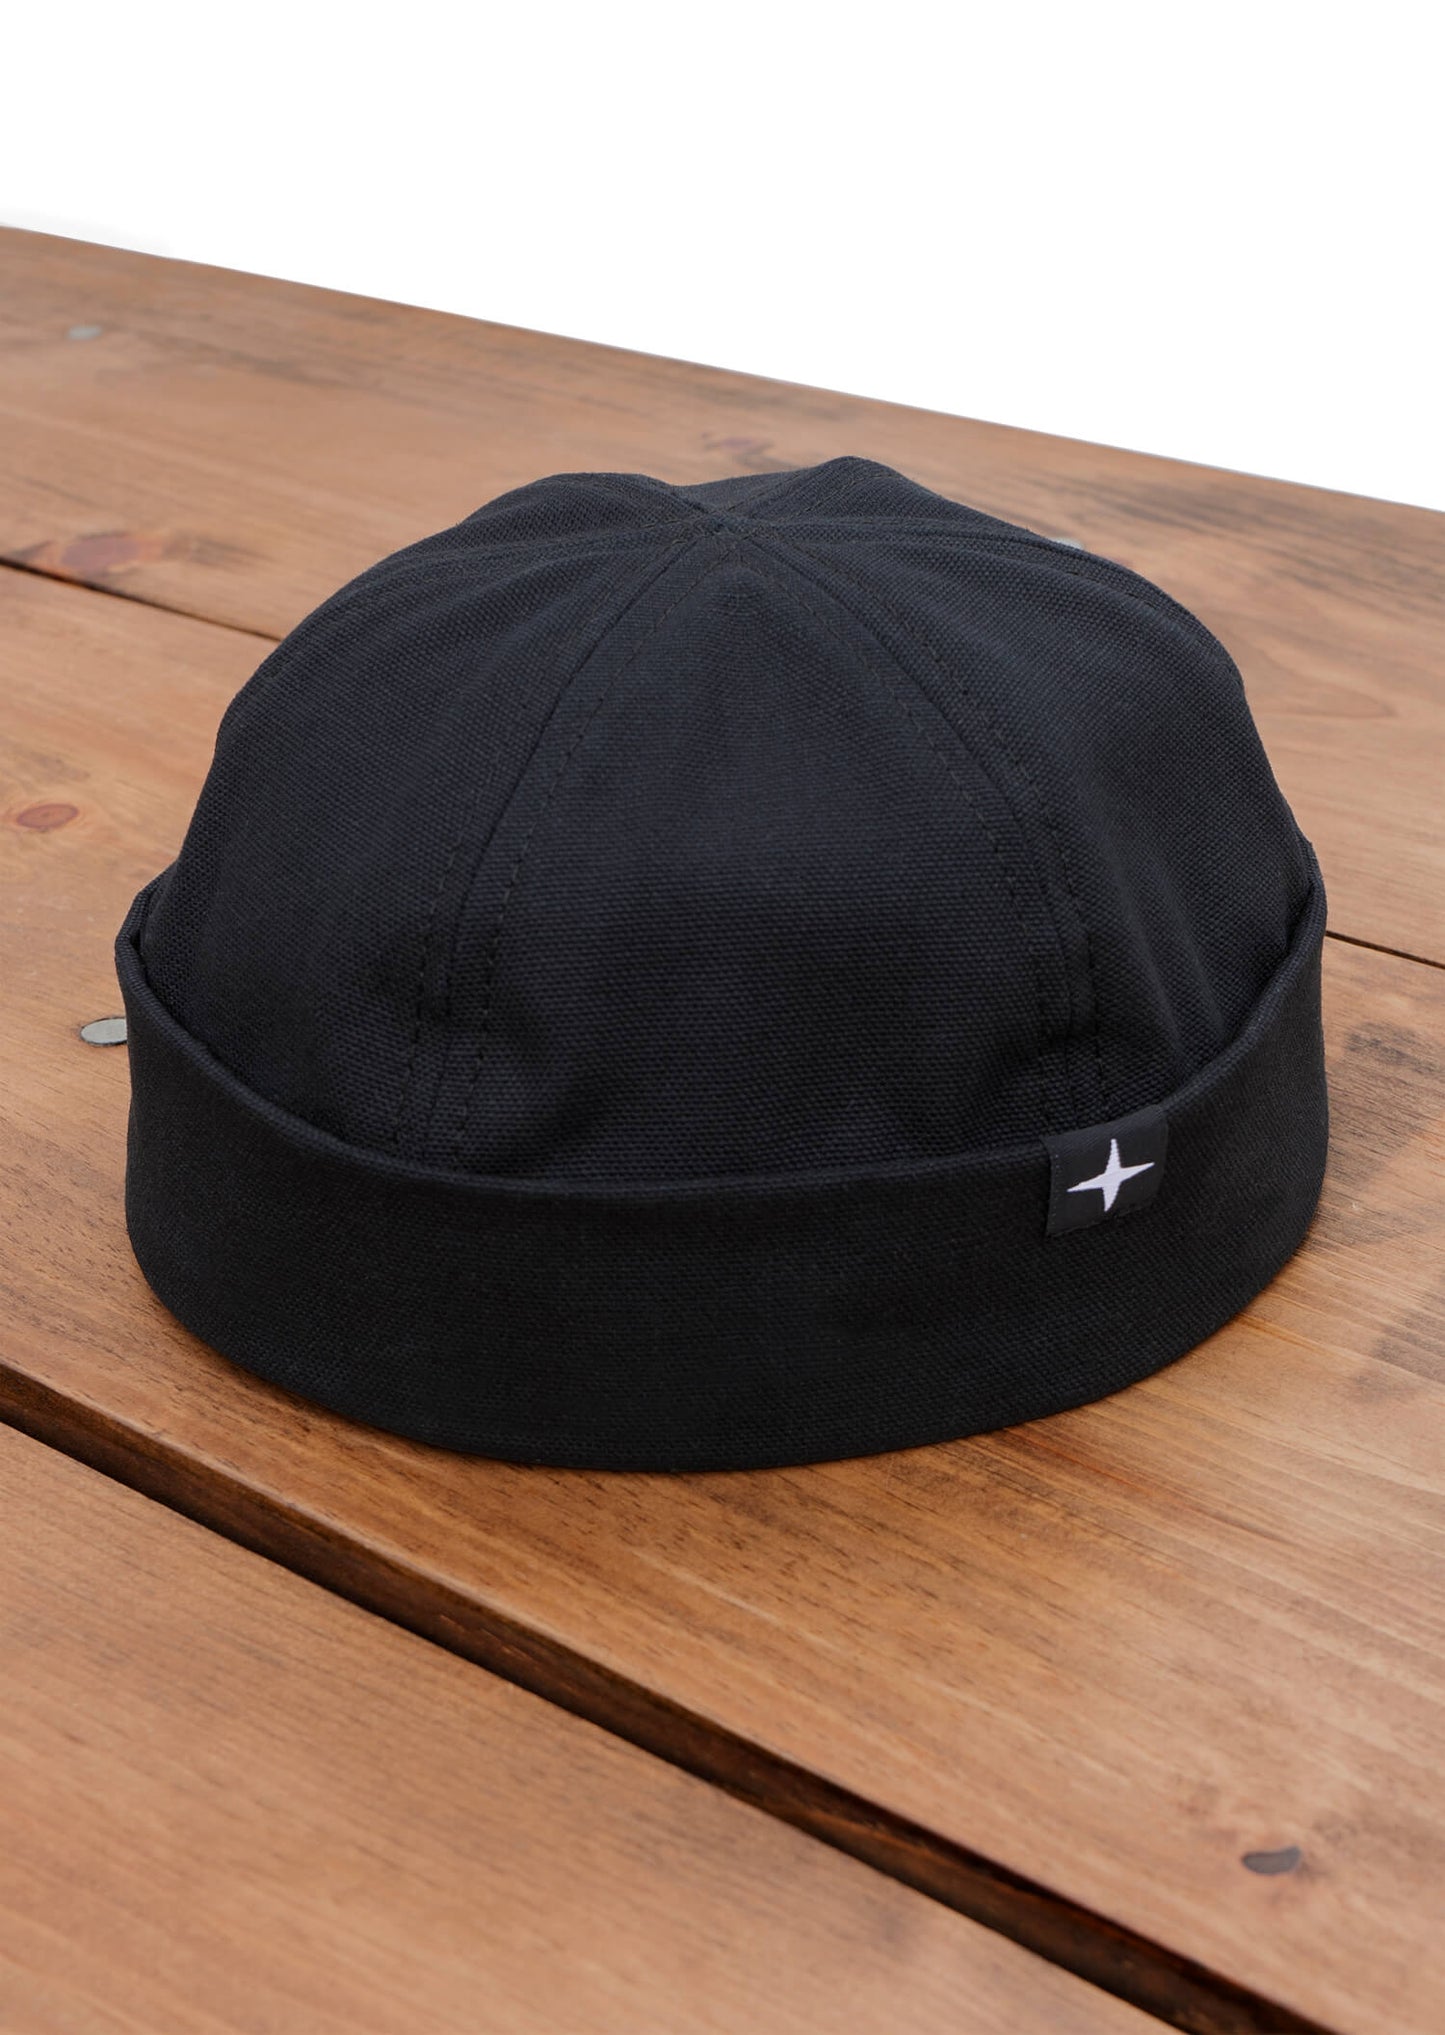 Docker hat - organic cotton - black